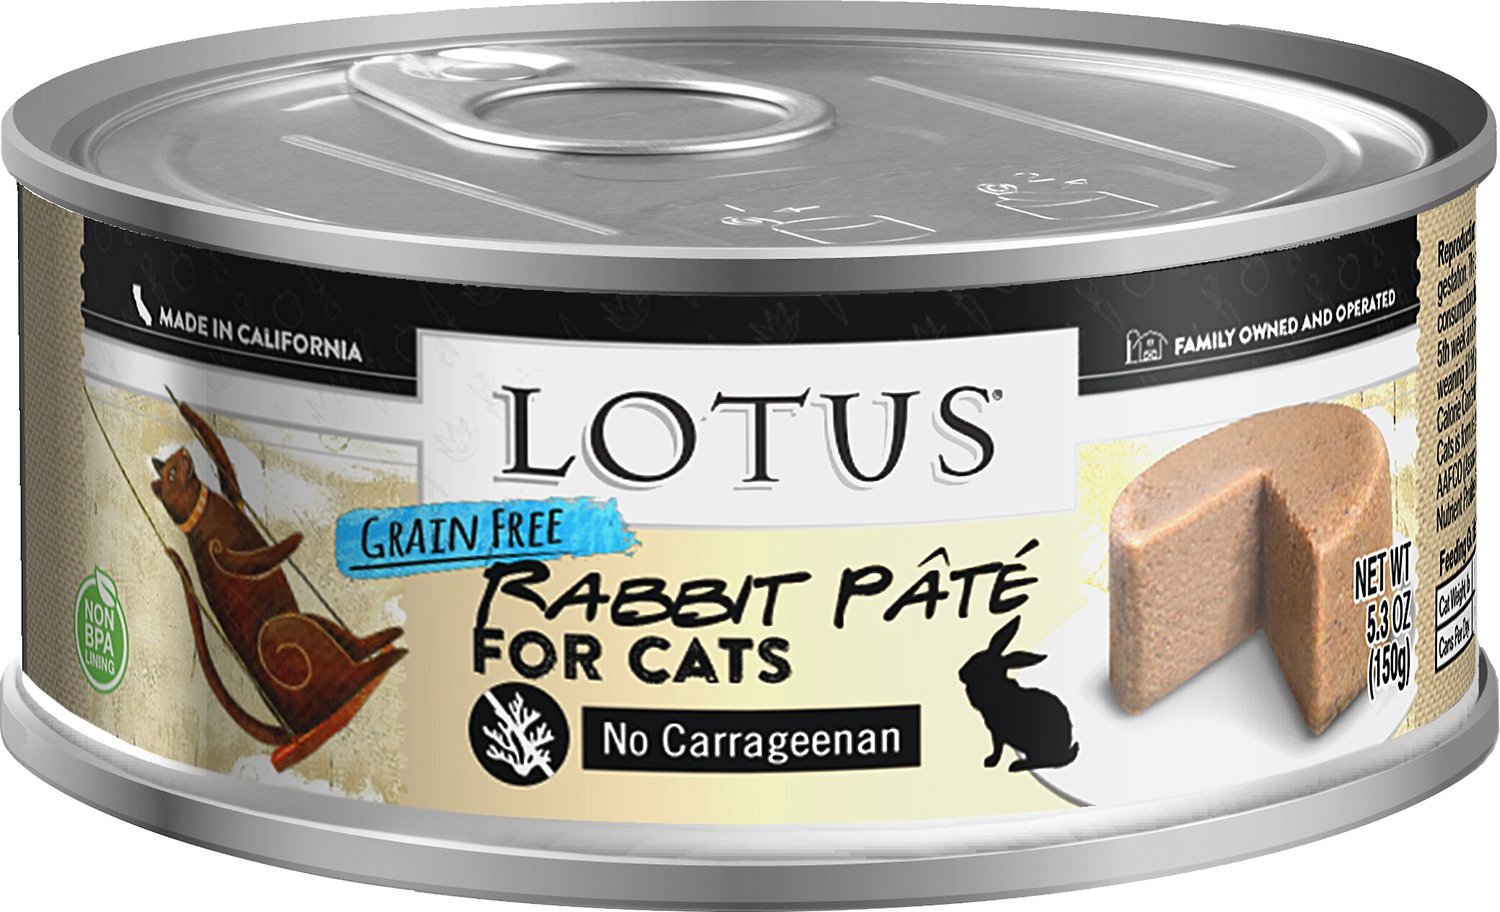 LOTUS Rabbit GrainFree Pate Canned Cat Food, 5.3oz, case of 24